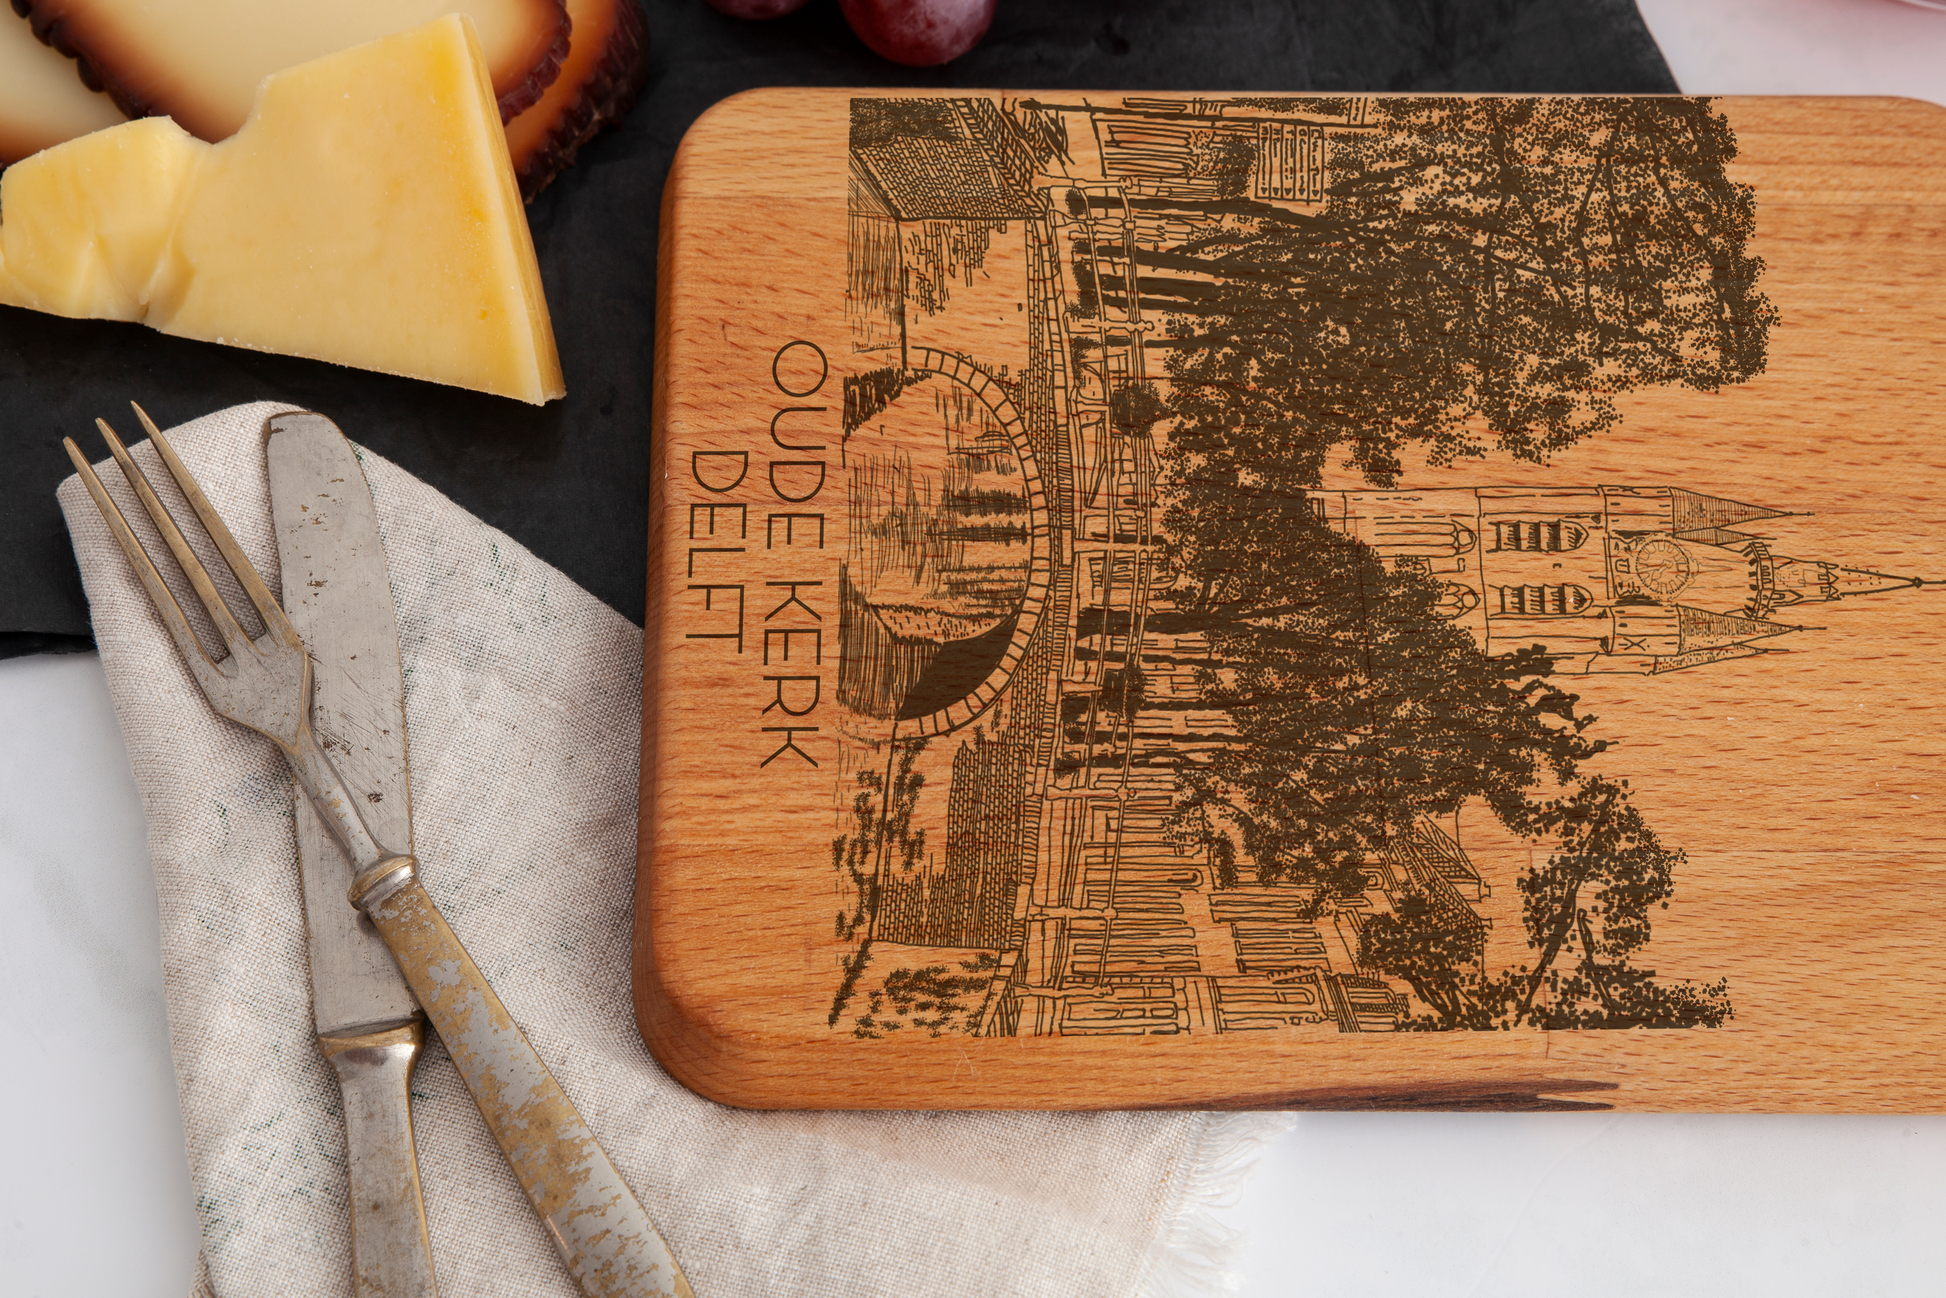 Delft, Oude Kerk, cheese board, wood grain